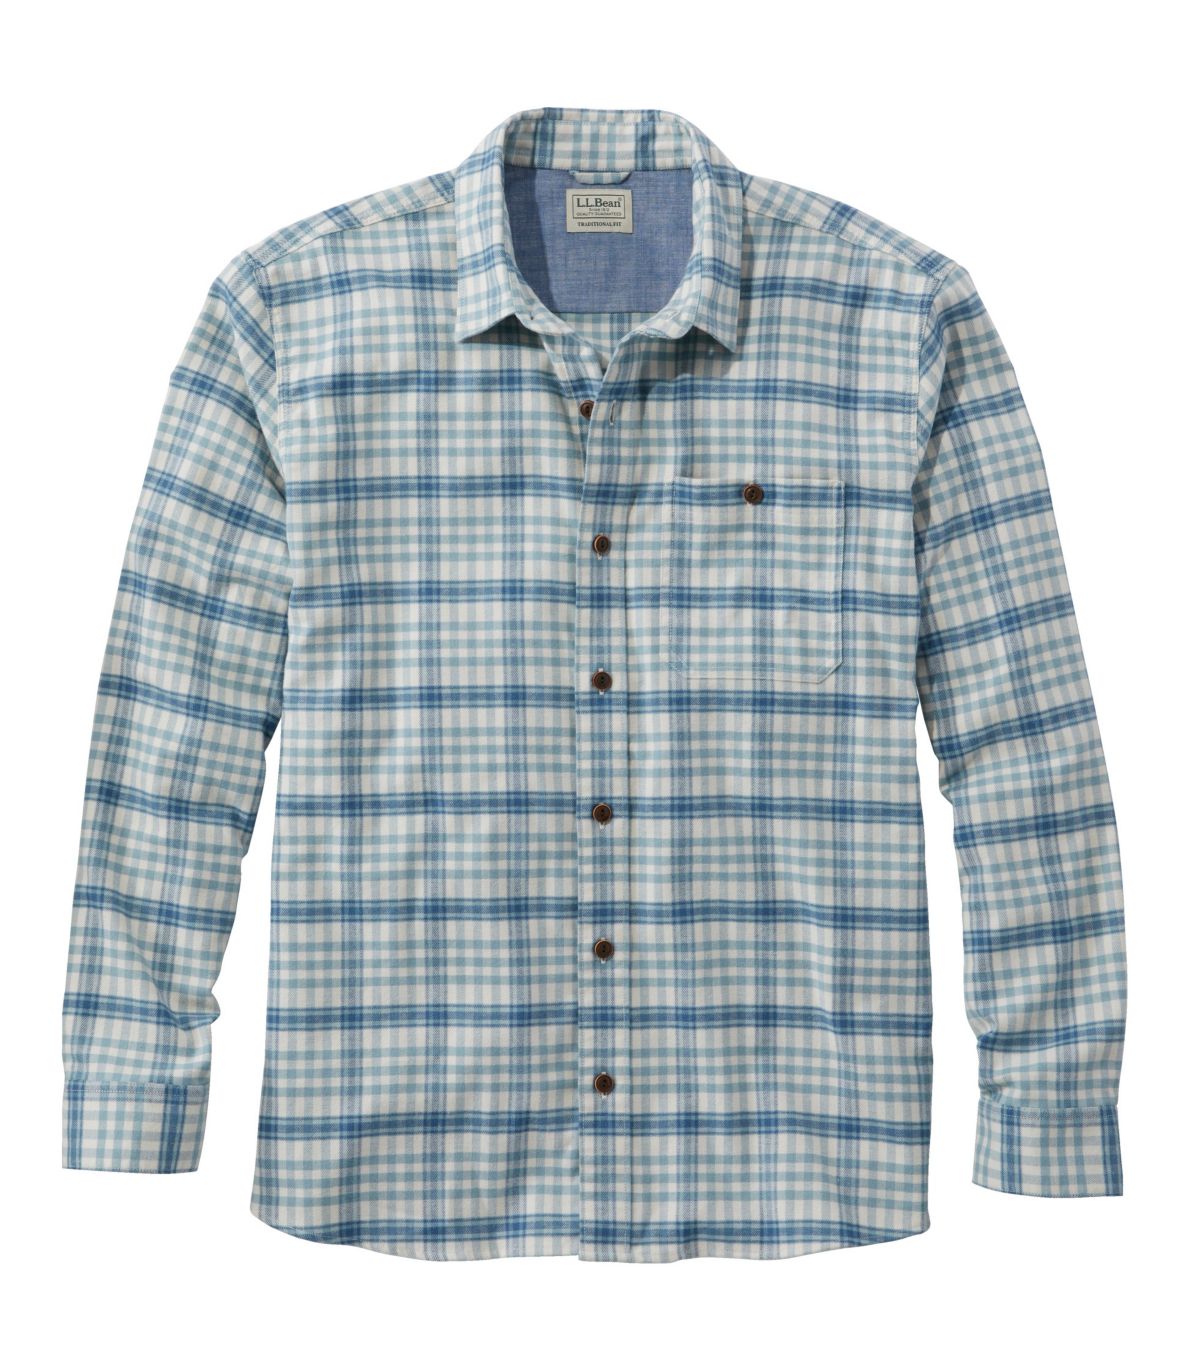 Men's BeanFlex All-Season Flannel Shirt, Traditional Untucked Fit, Long-Sleeve